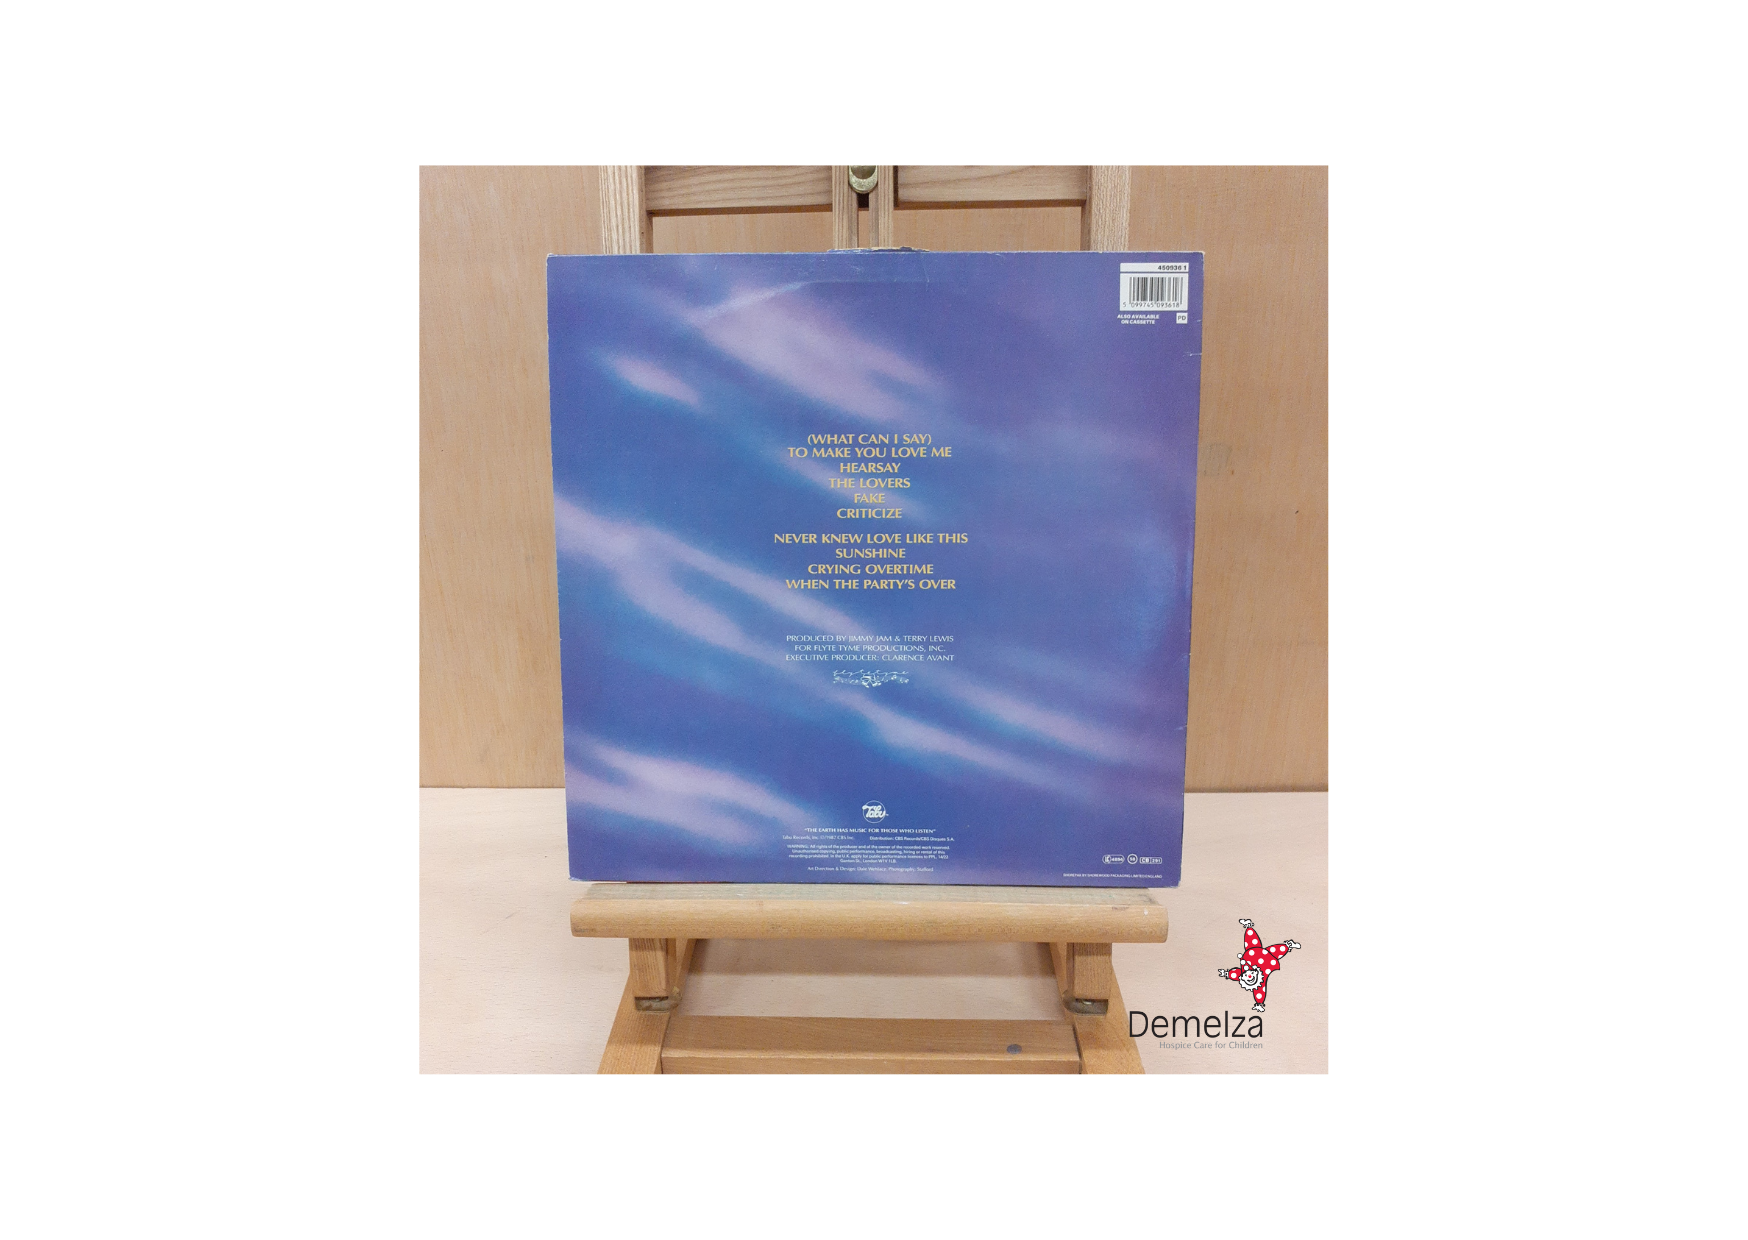 Alexander O Neal Hearsay vinyl 12 inch vinyl album